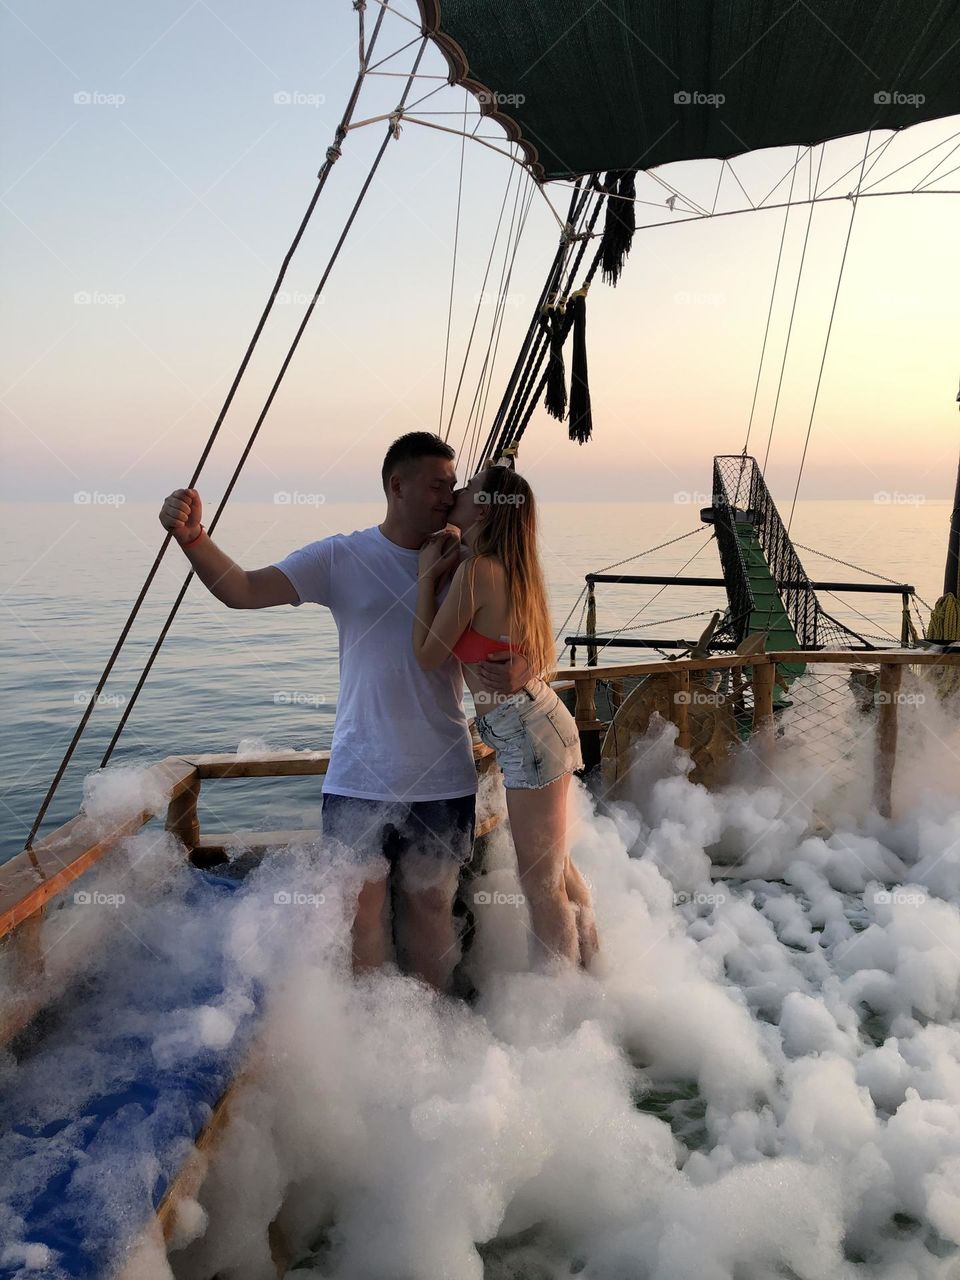 A kiss on a ship